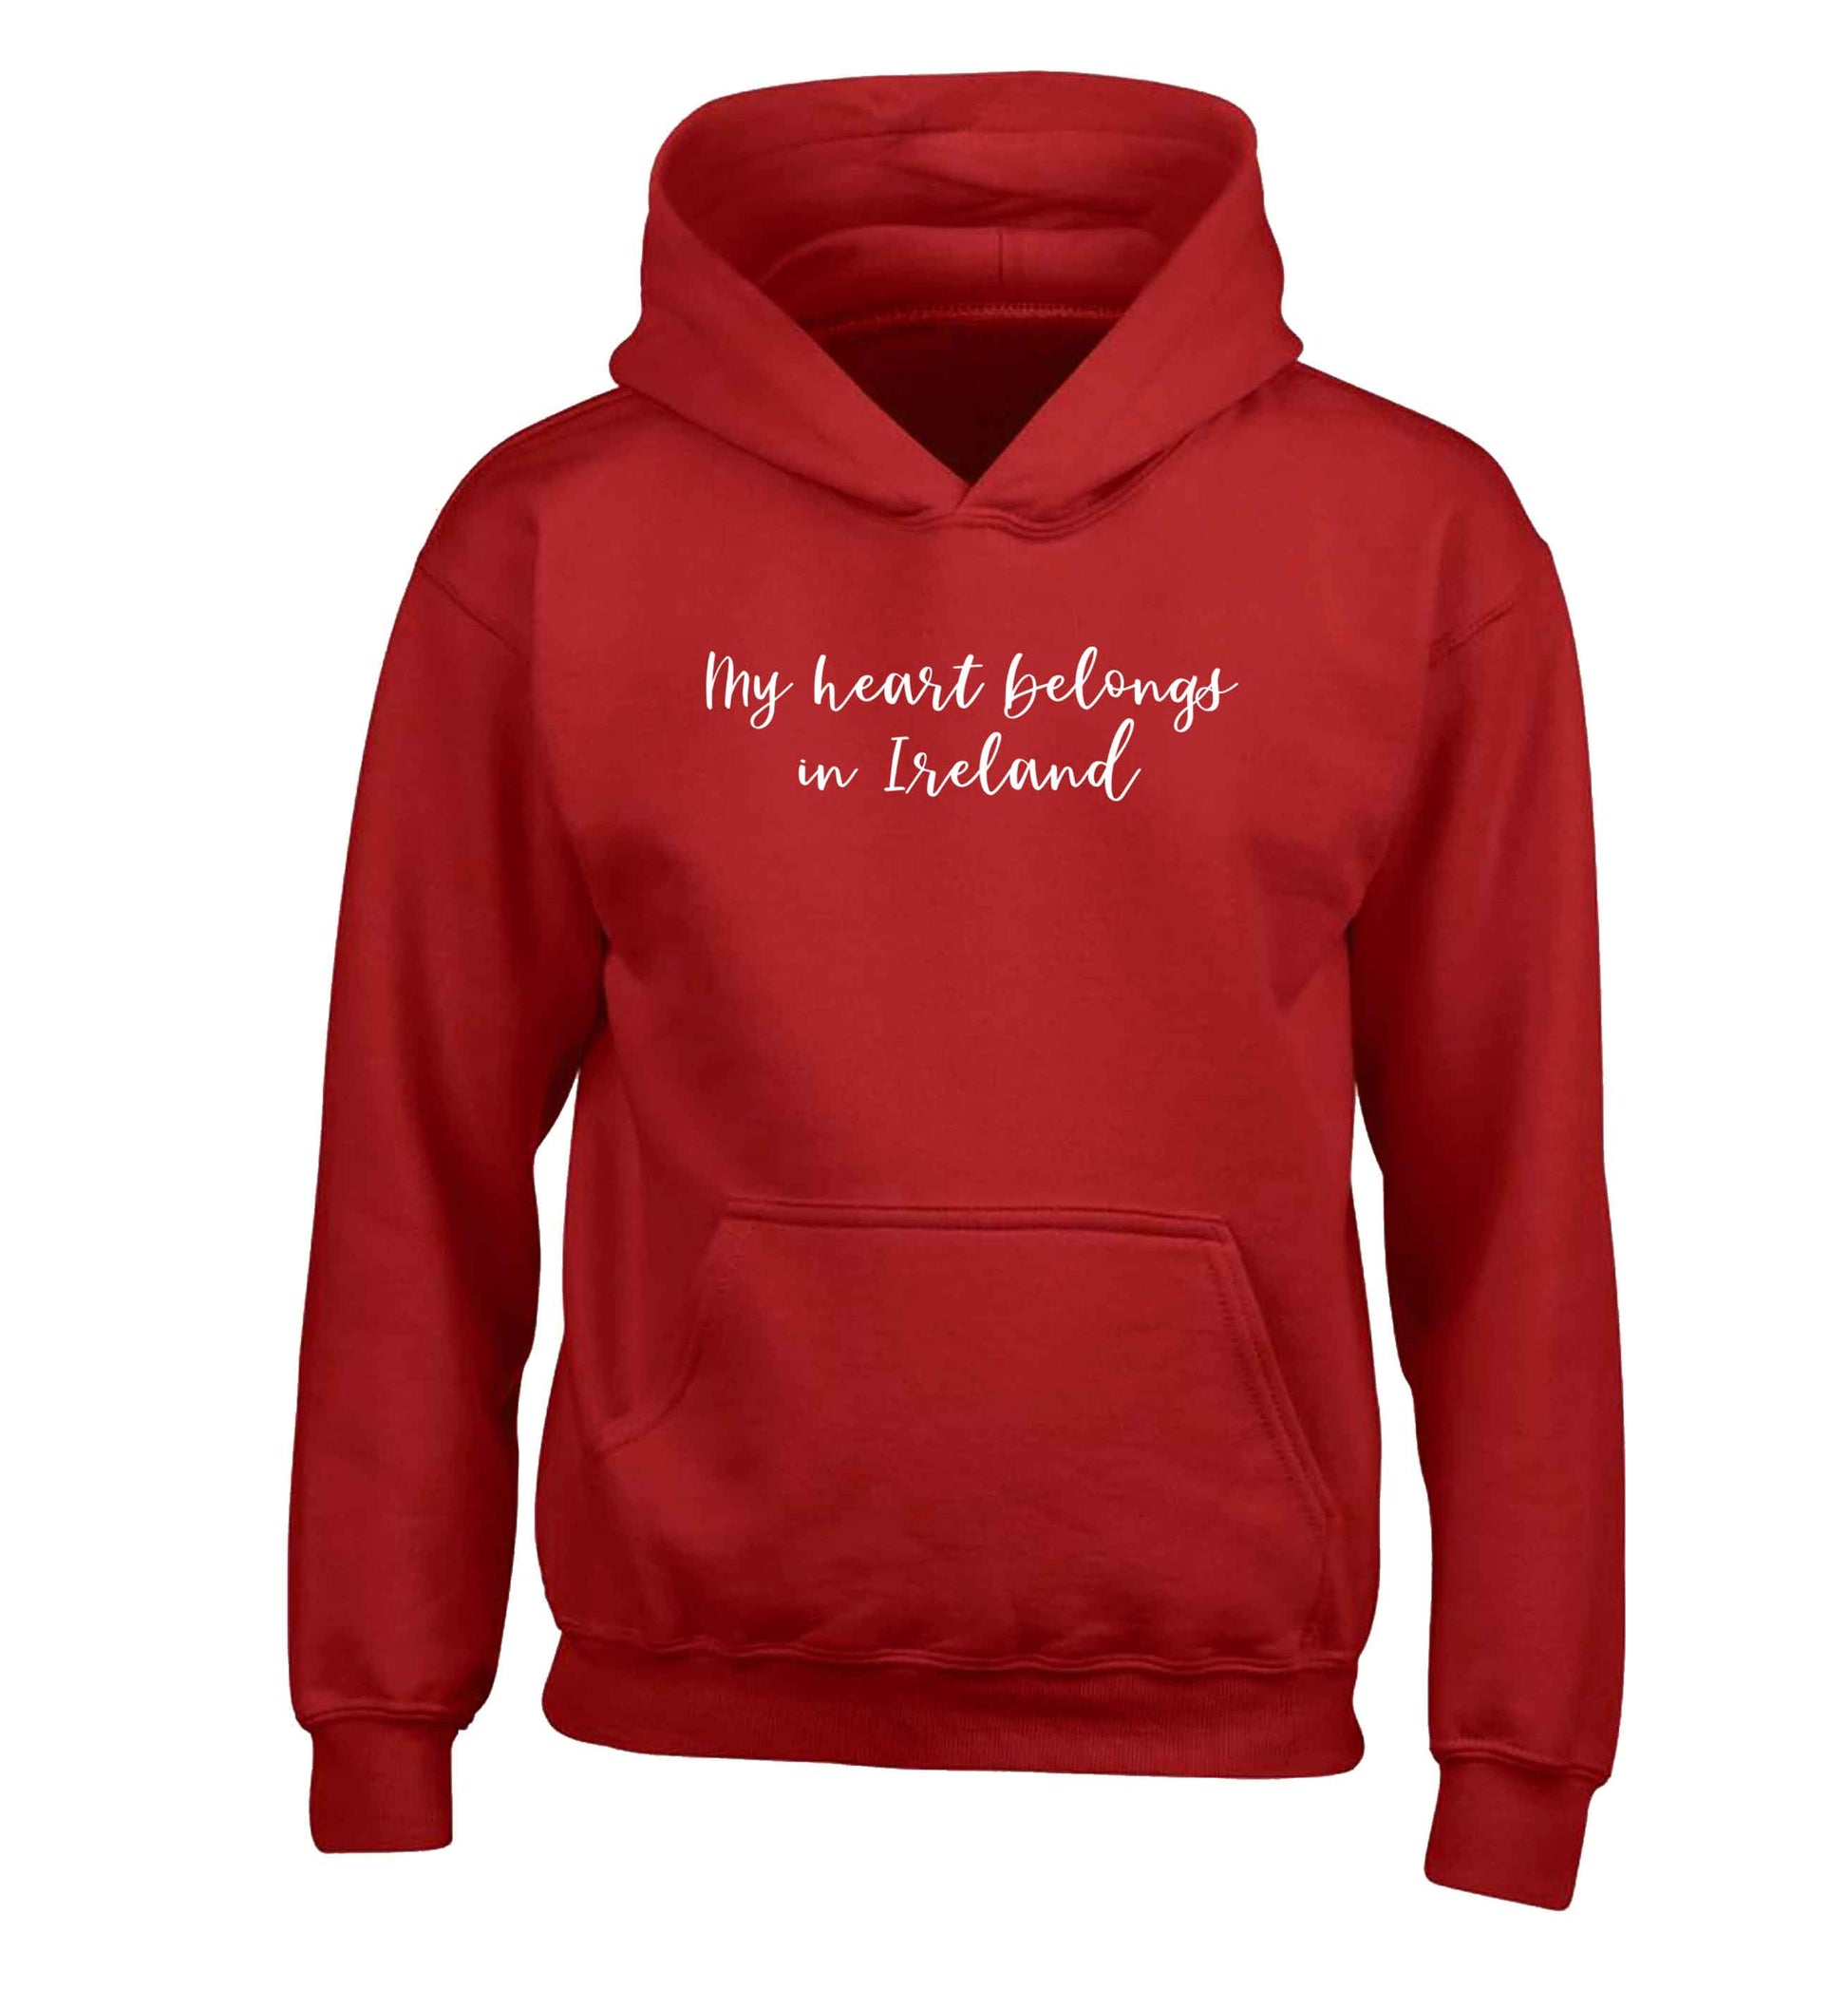 My heart belongs in Ireland children's red hoodie 12-13 Years